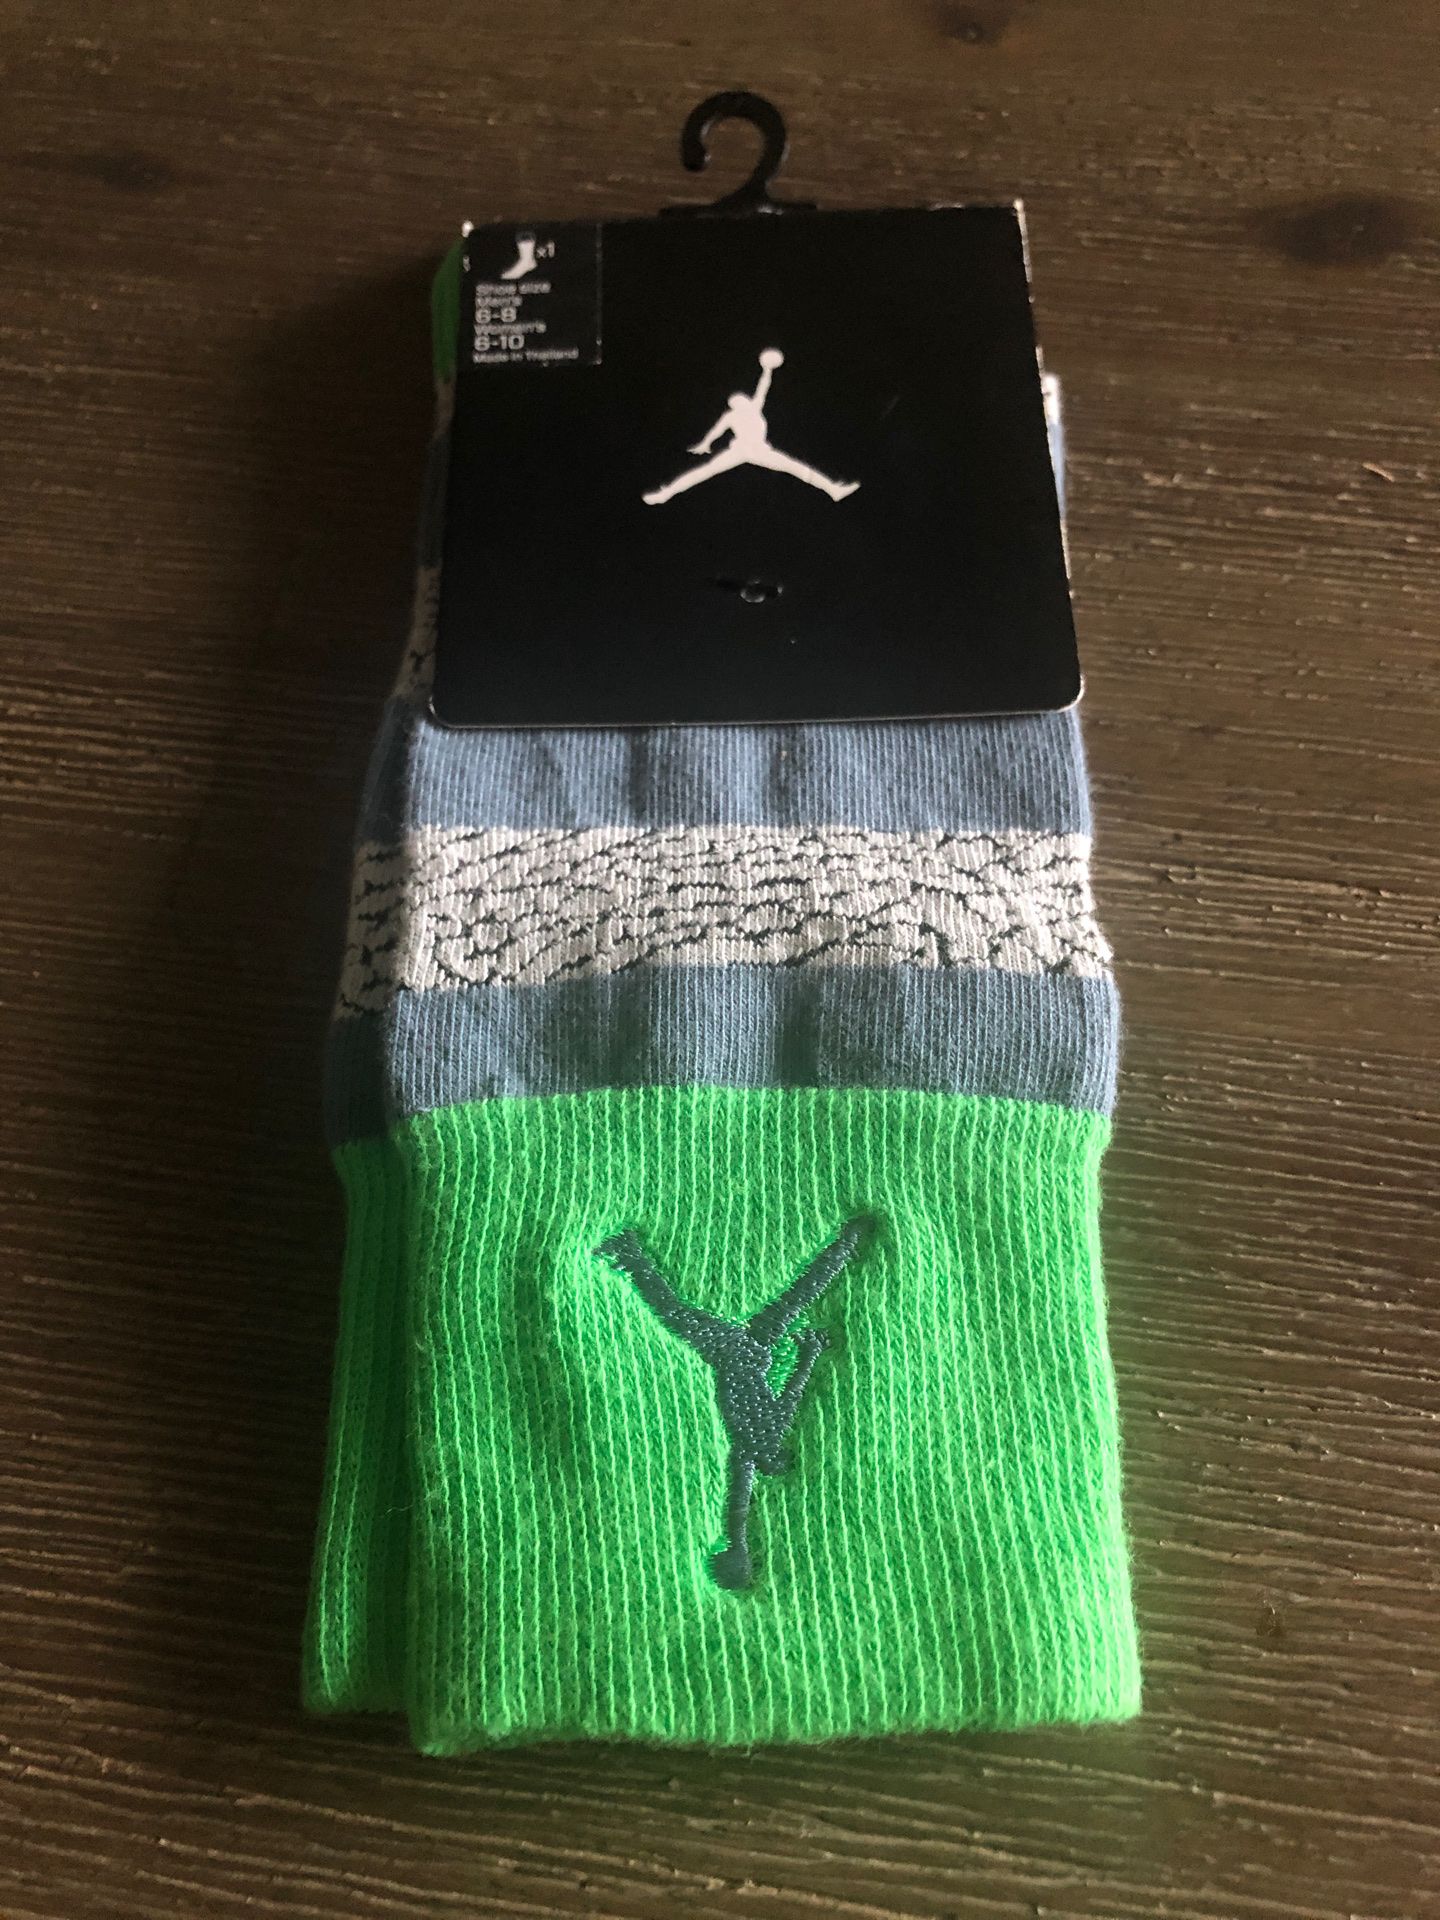 Nike Jordan socks grey & green size medium